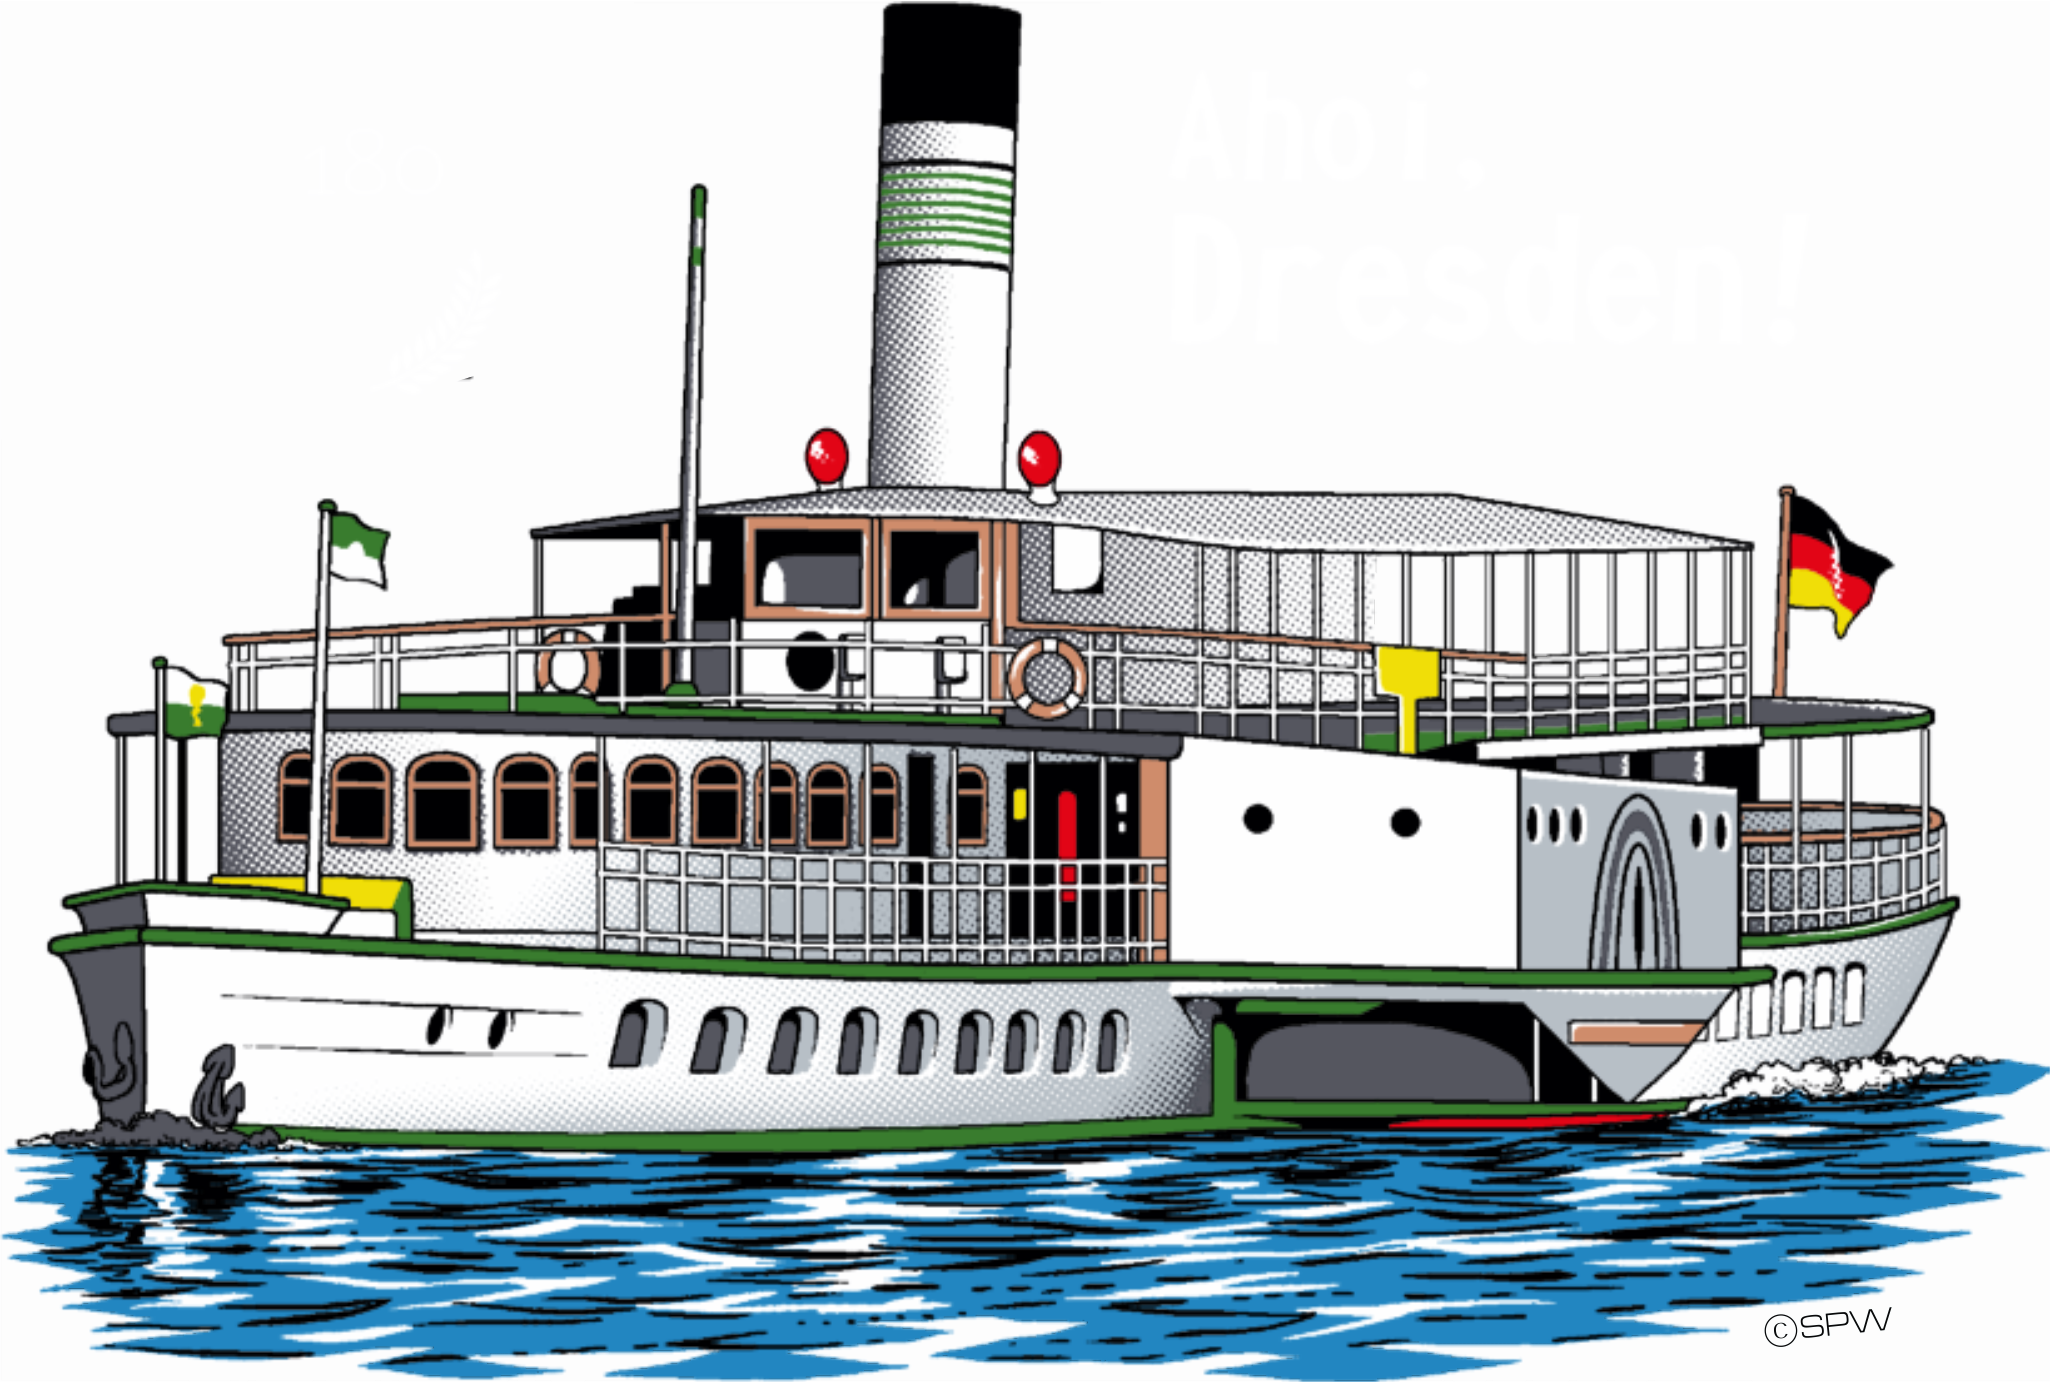 https://www.shirtpresswerk.de/out/pictures/master/product/1/sp8020dampferschaufelraddampferbootschiffdresdenshirtpresswerktransfermotiv.png